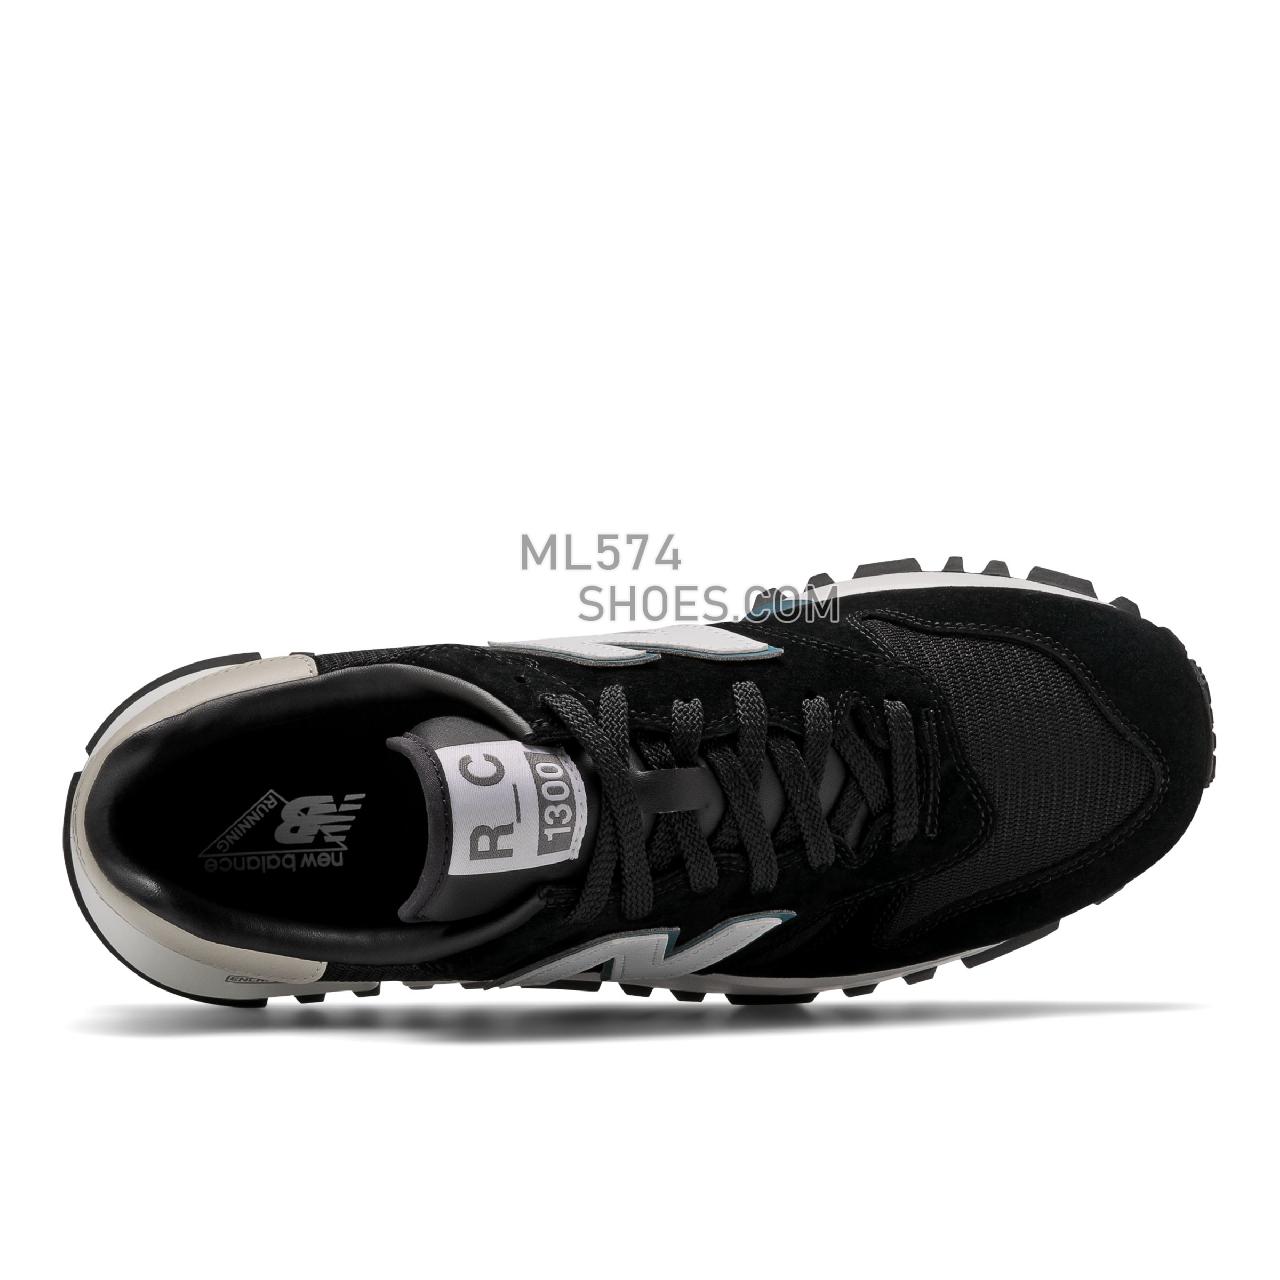 New Balance MS1300V1 - Men's Sport Style Sneakers - Black with Mallard Blue - MS1300BG